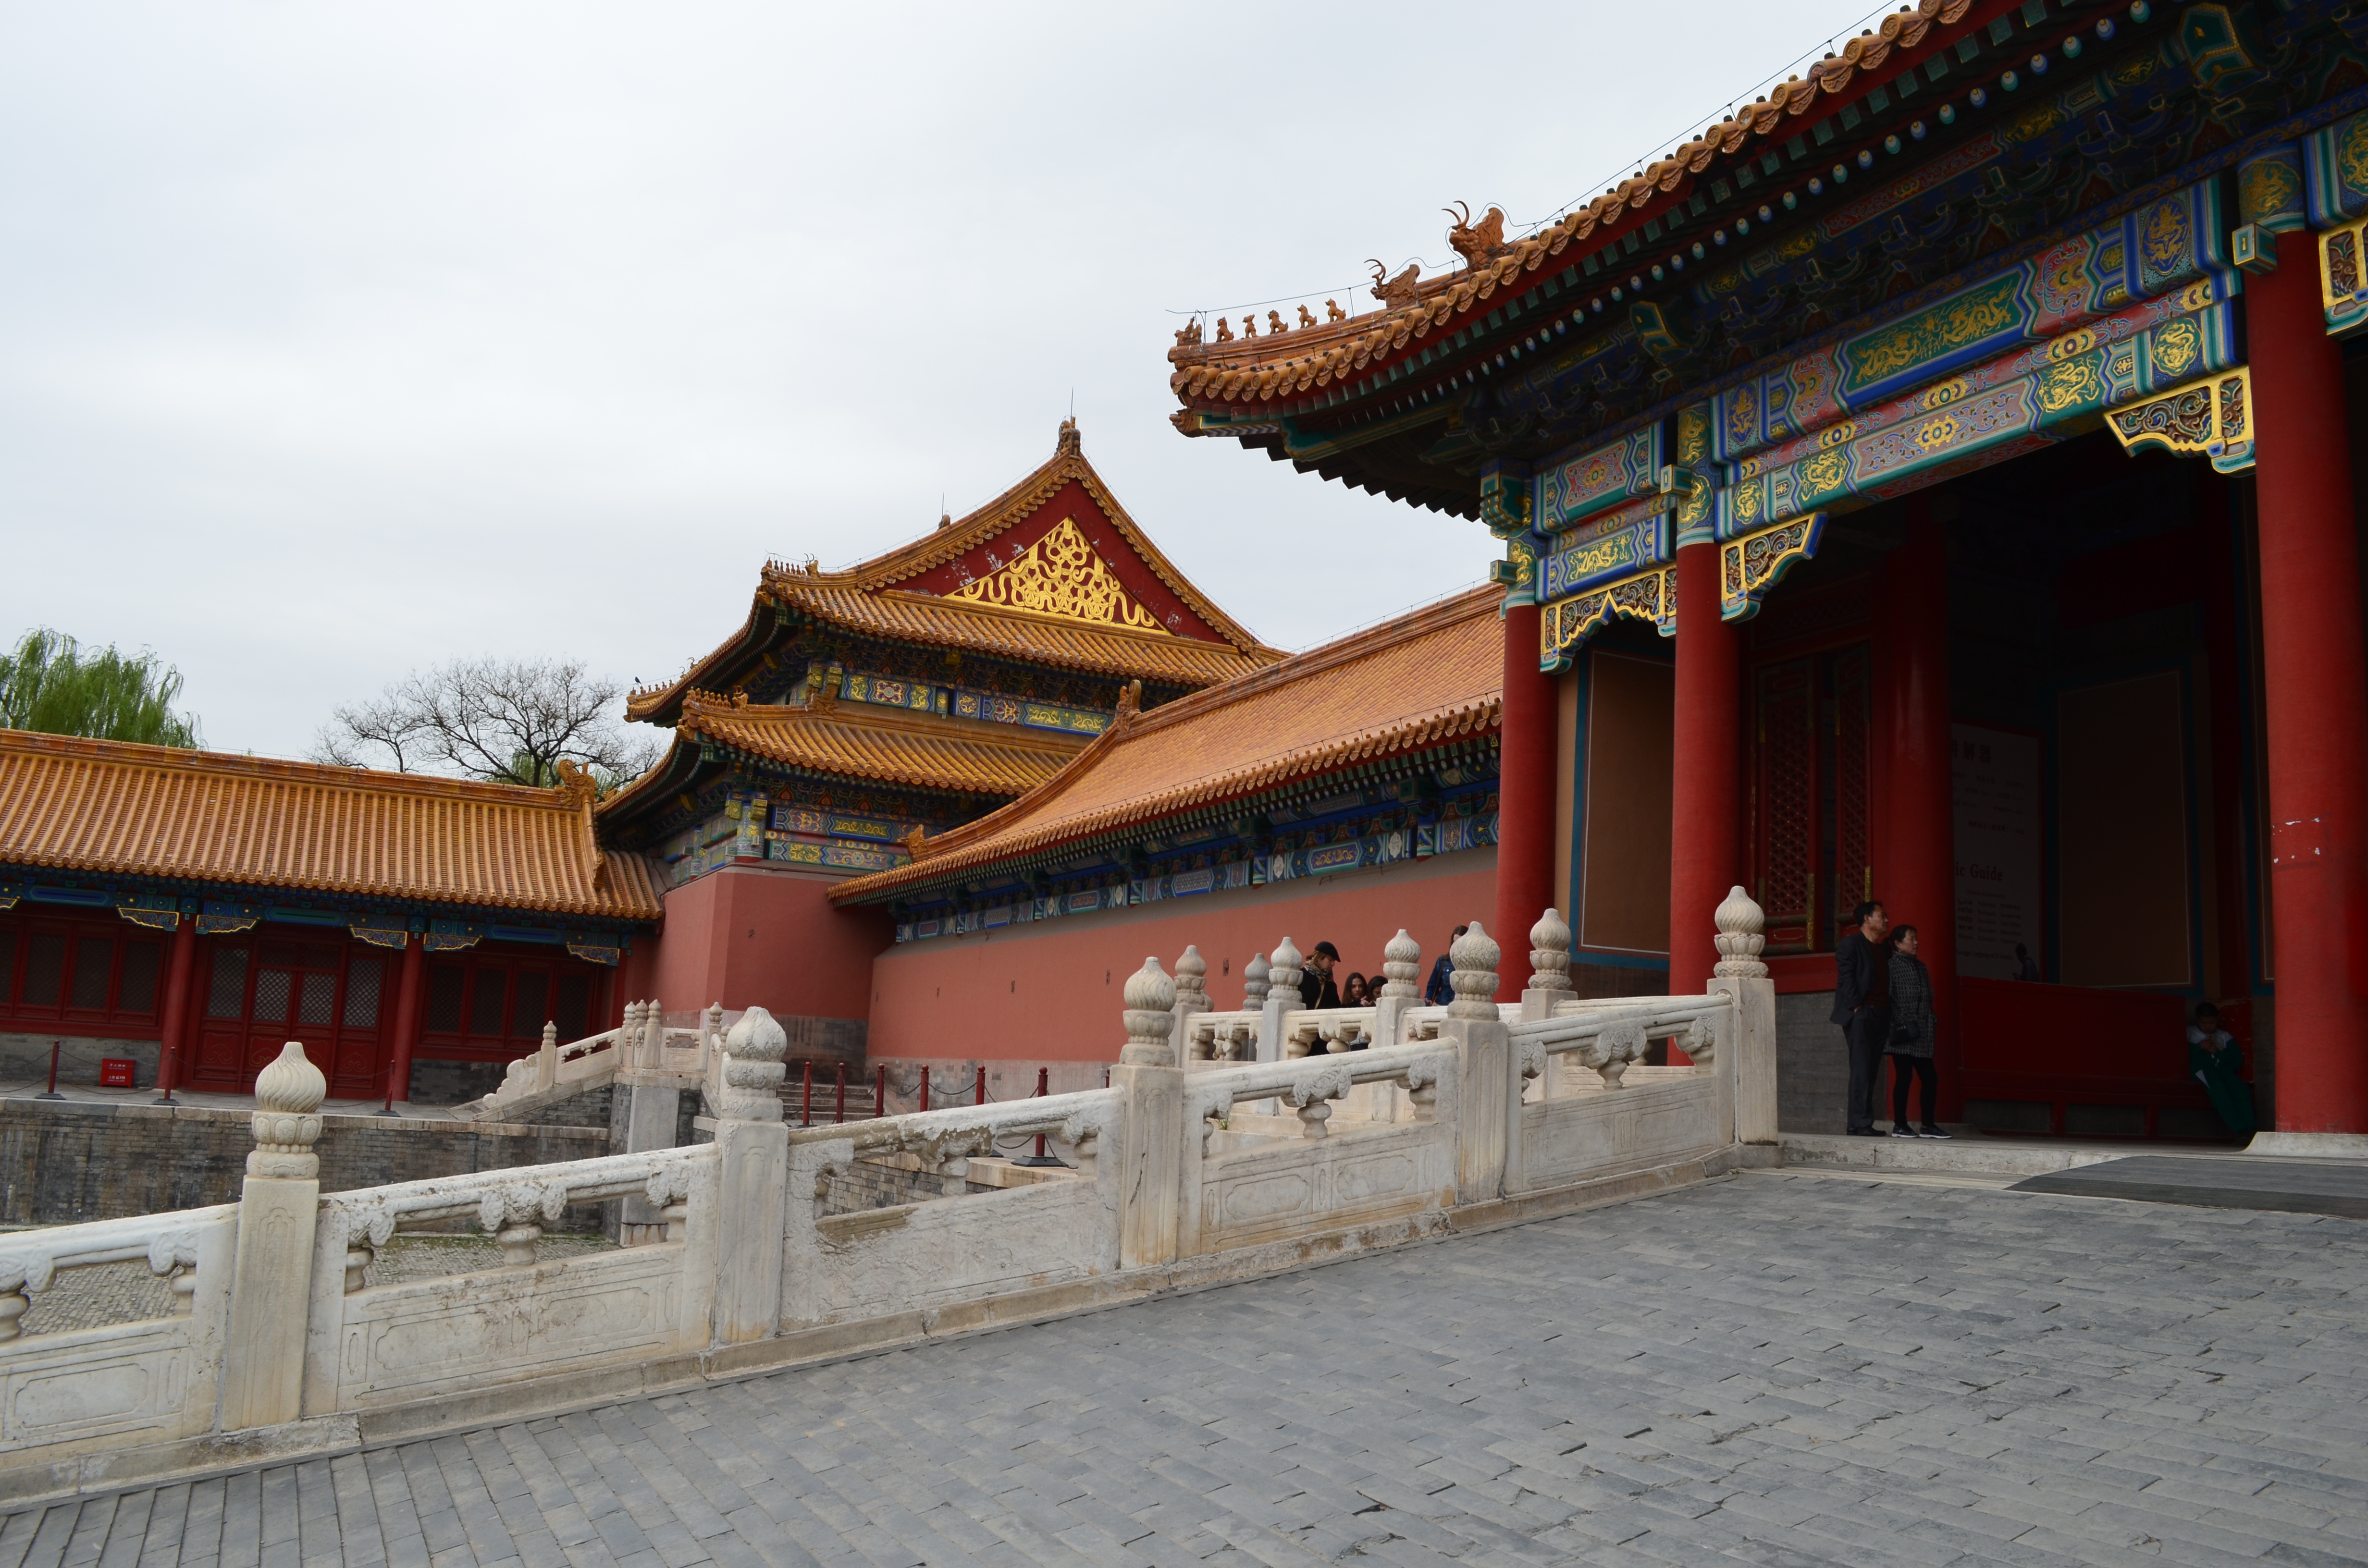 ./2018/03 - Viking China/06 - Forbidden City/DSC_0970.JPG